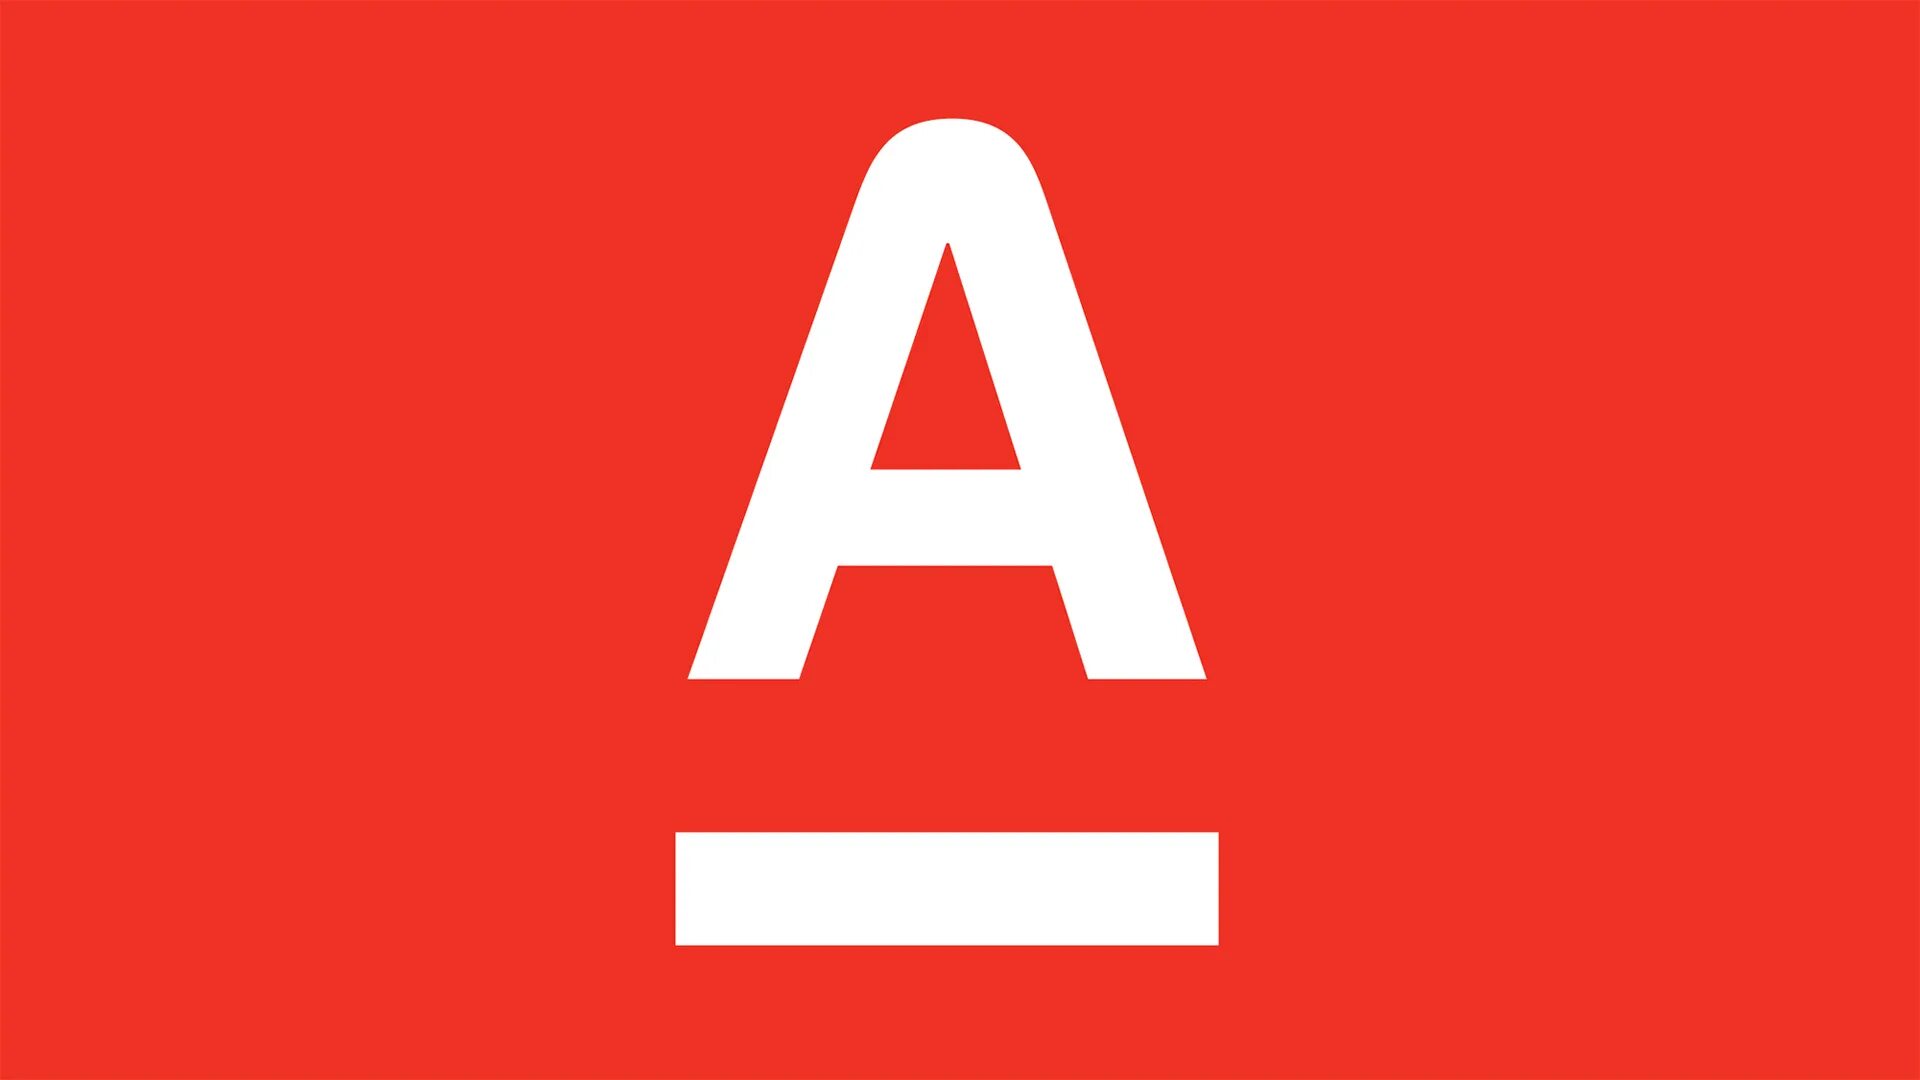 Альфа банк. Логотип Alfa Bank. Альфа банк лого вектор. Символ Альфа банка. Альфабой